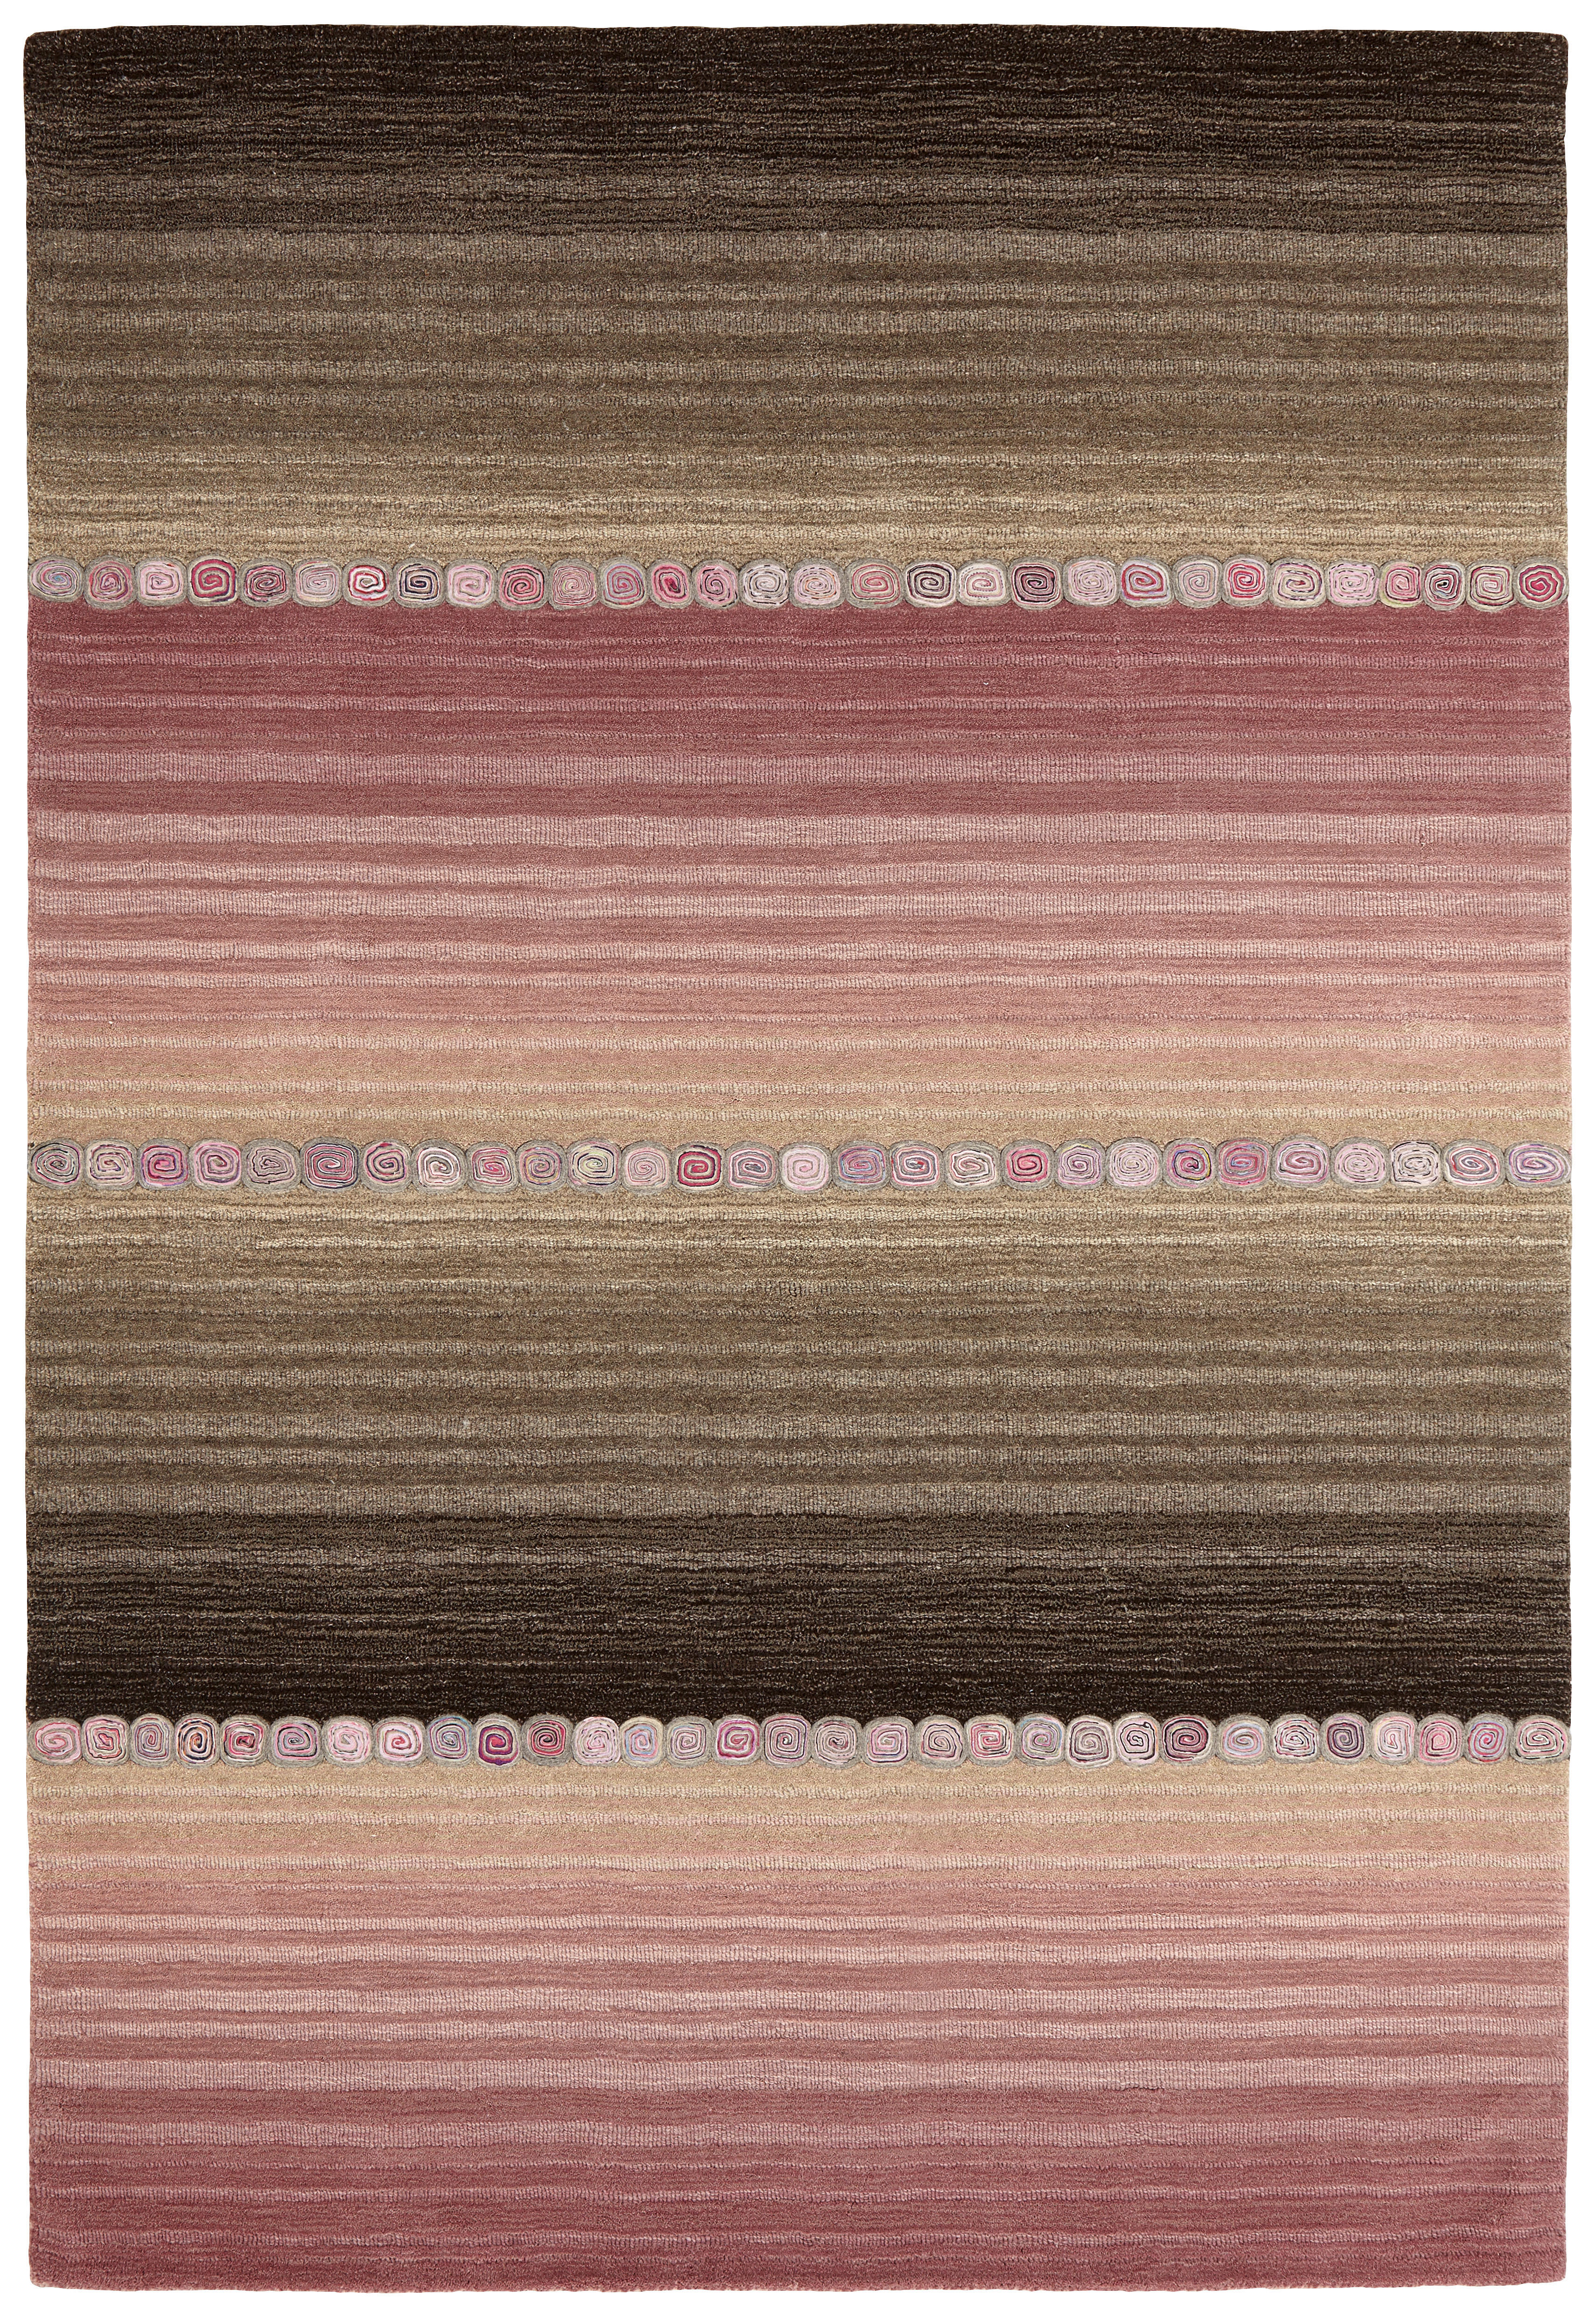 Cazaris ORIENTÁLNÍ KOBEREC, 120/180 cm, šedá, pink - šedá, pink